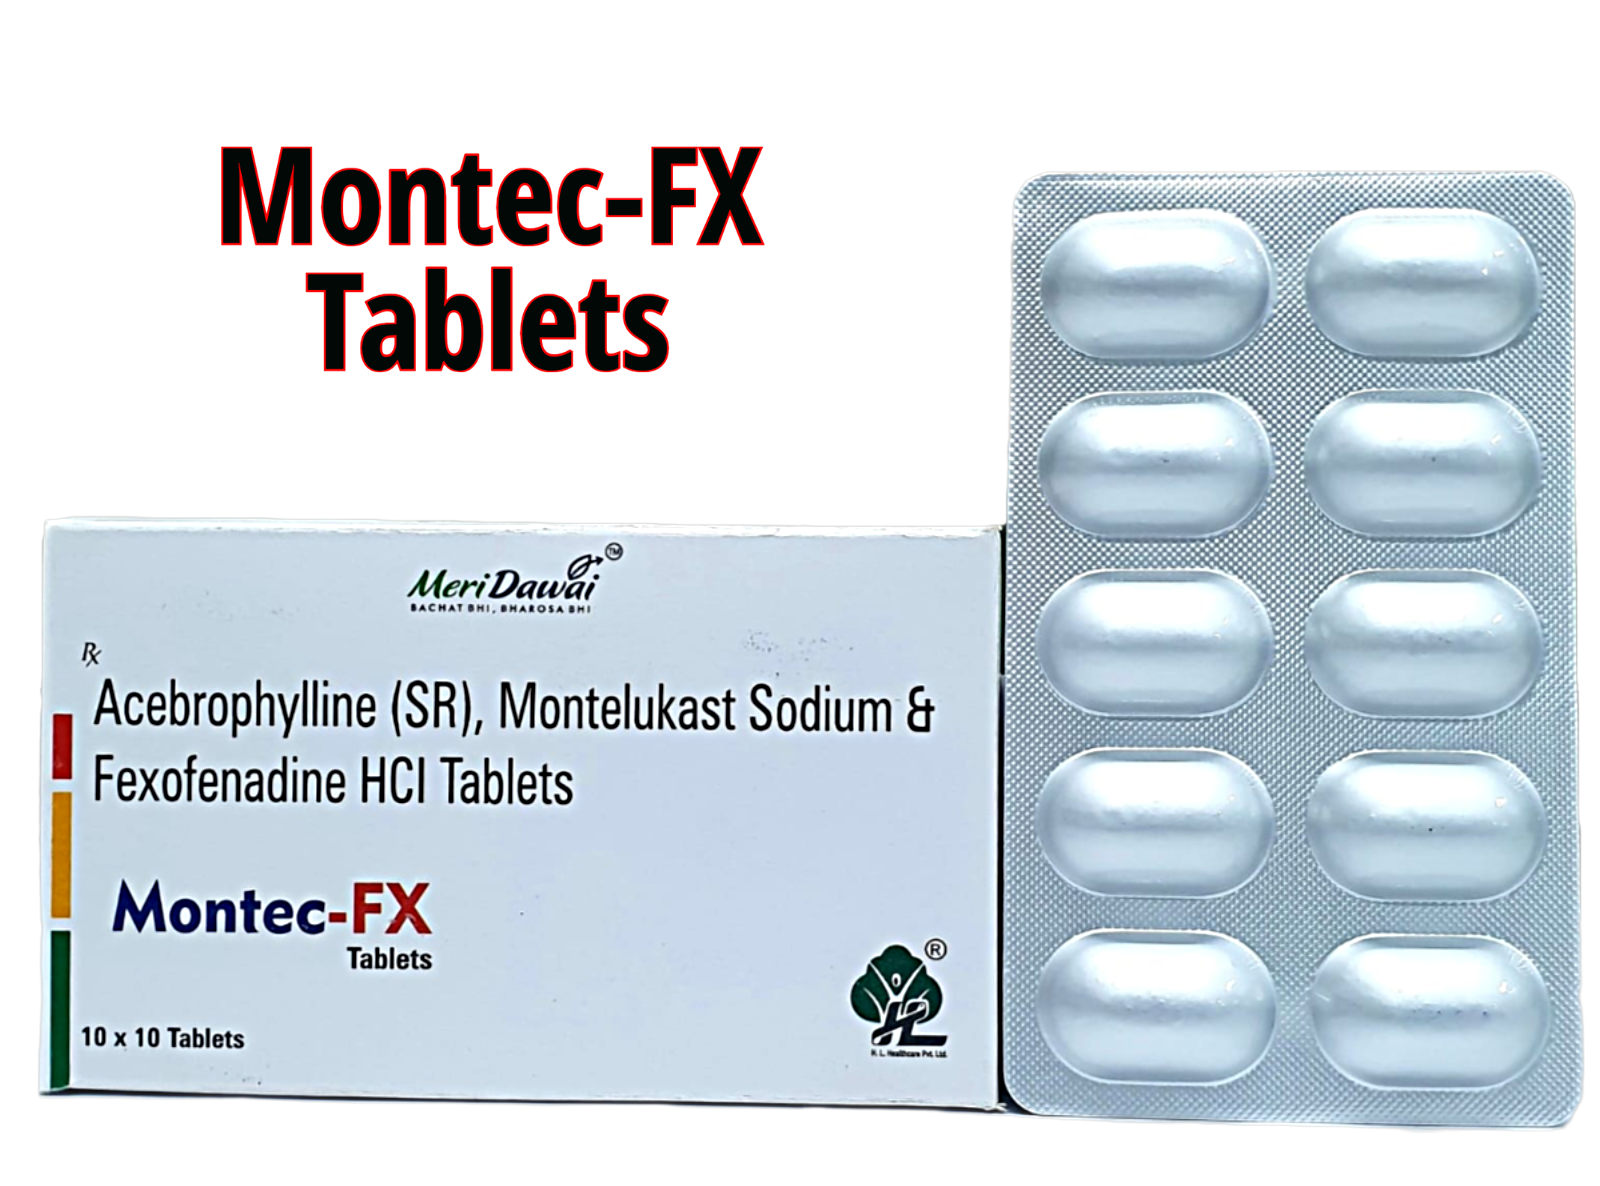 Montelukast 10mg+Fexofenadine 120mg+Acebrophyline 200mg